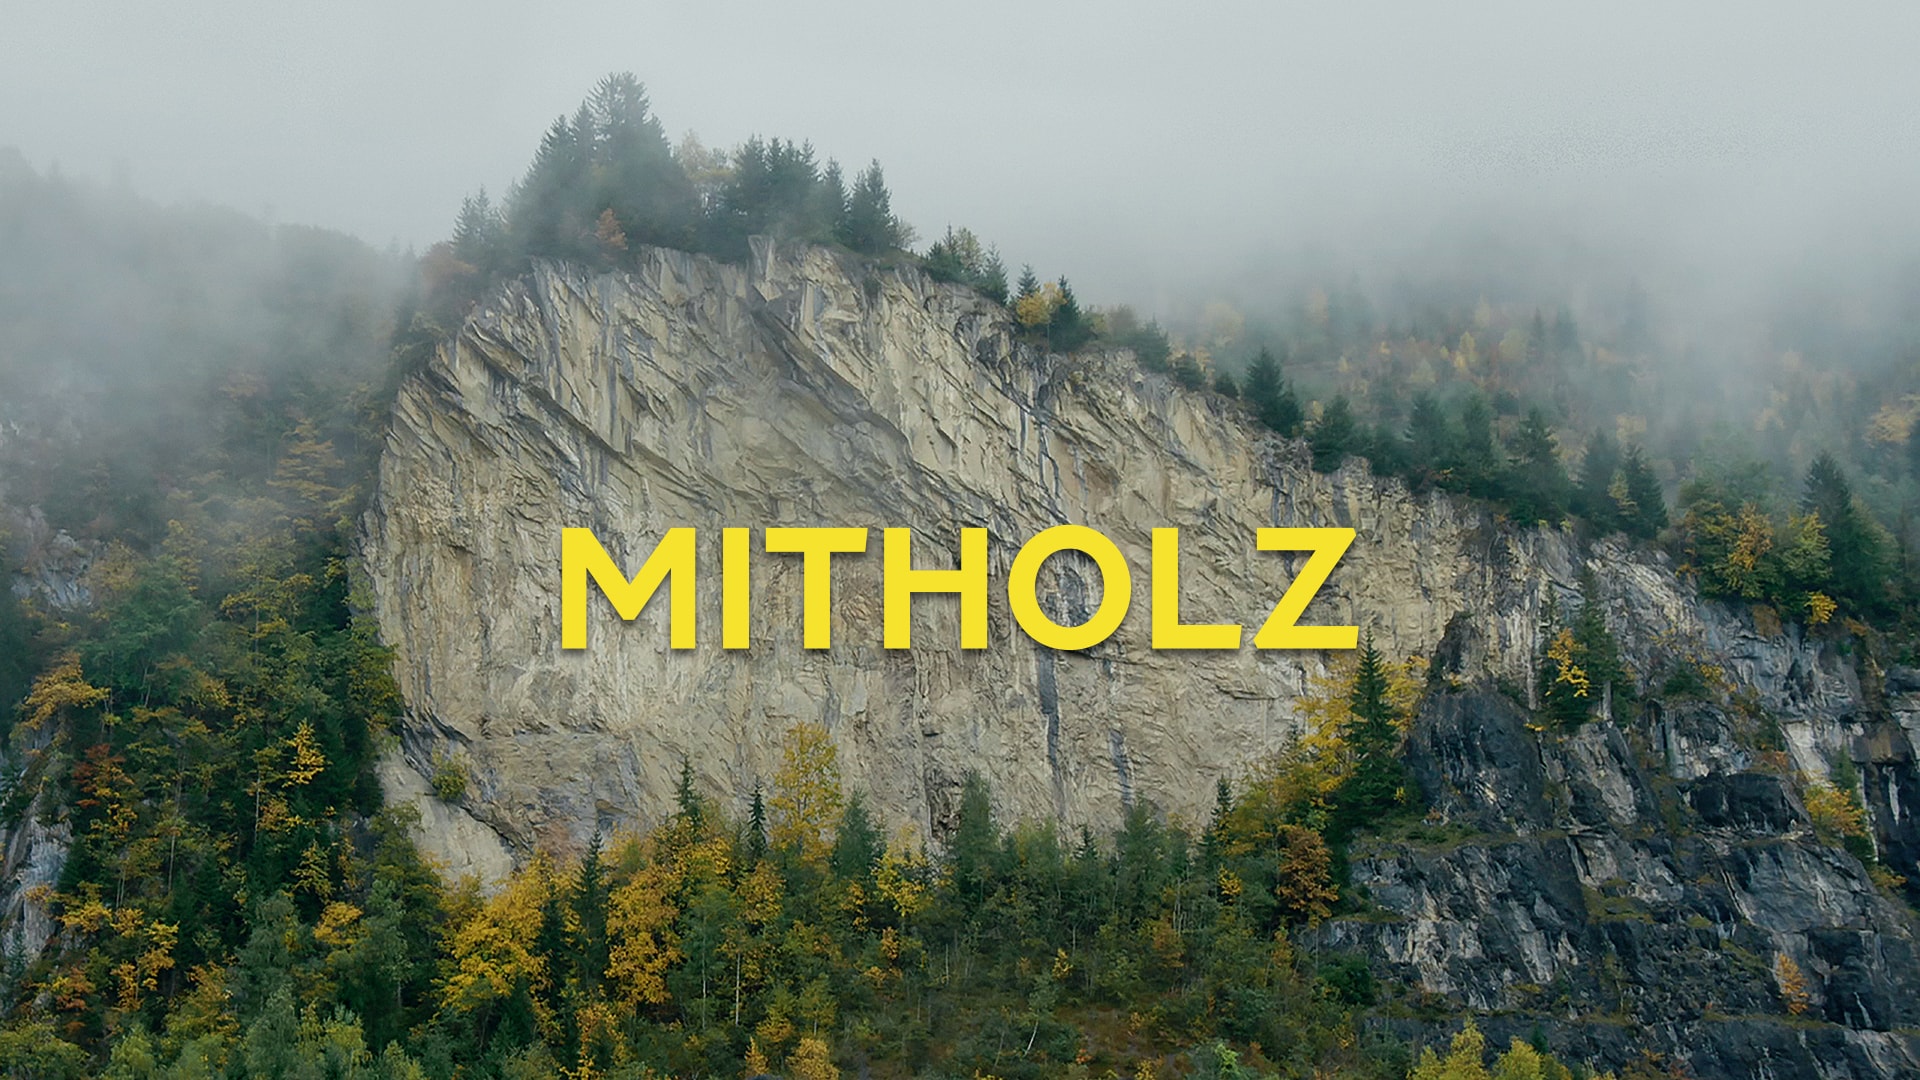 Mitholz - L'eredità esplosiva dell'esercito